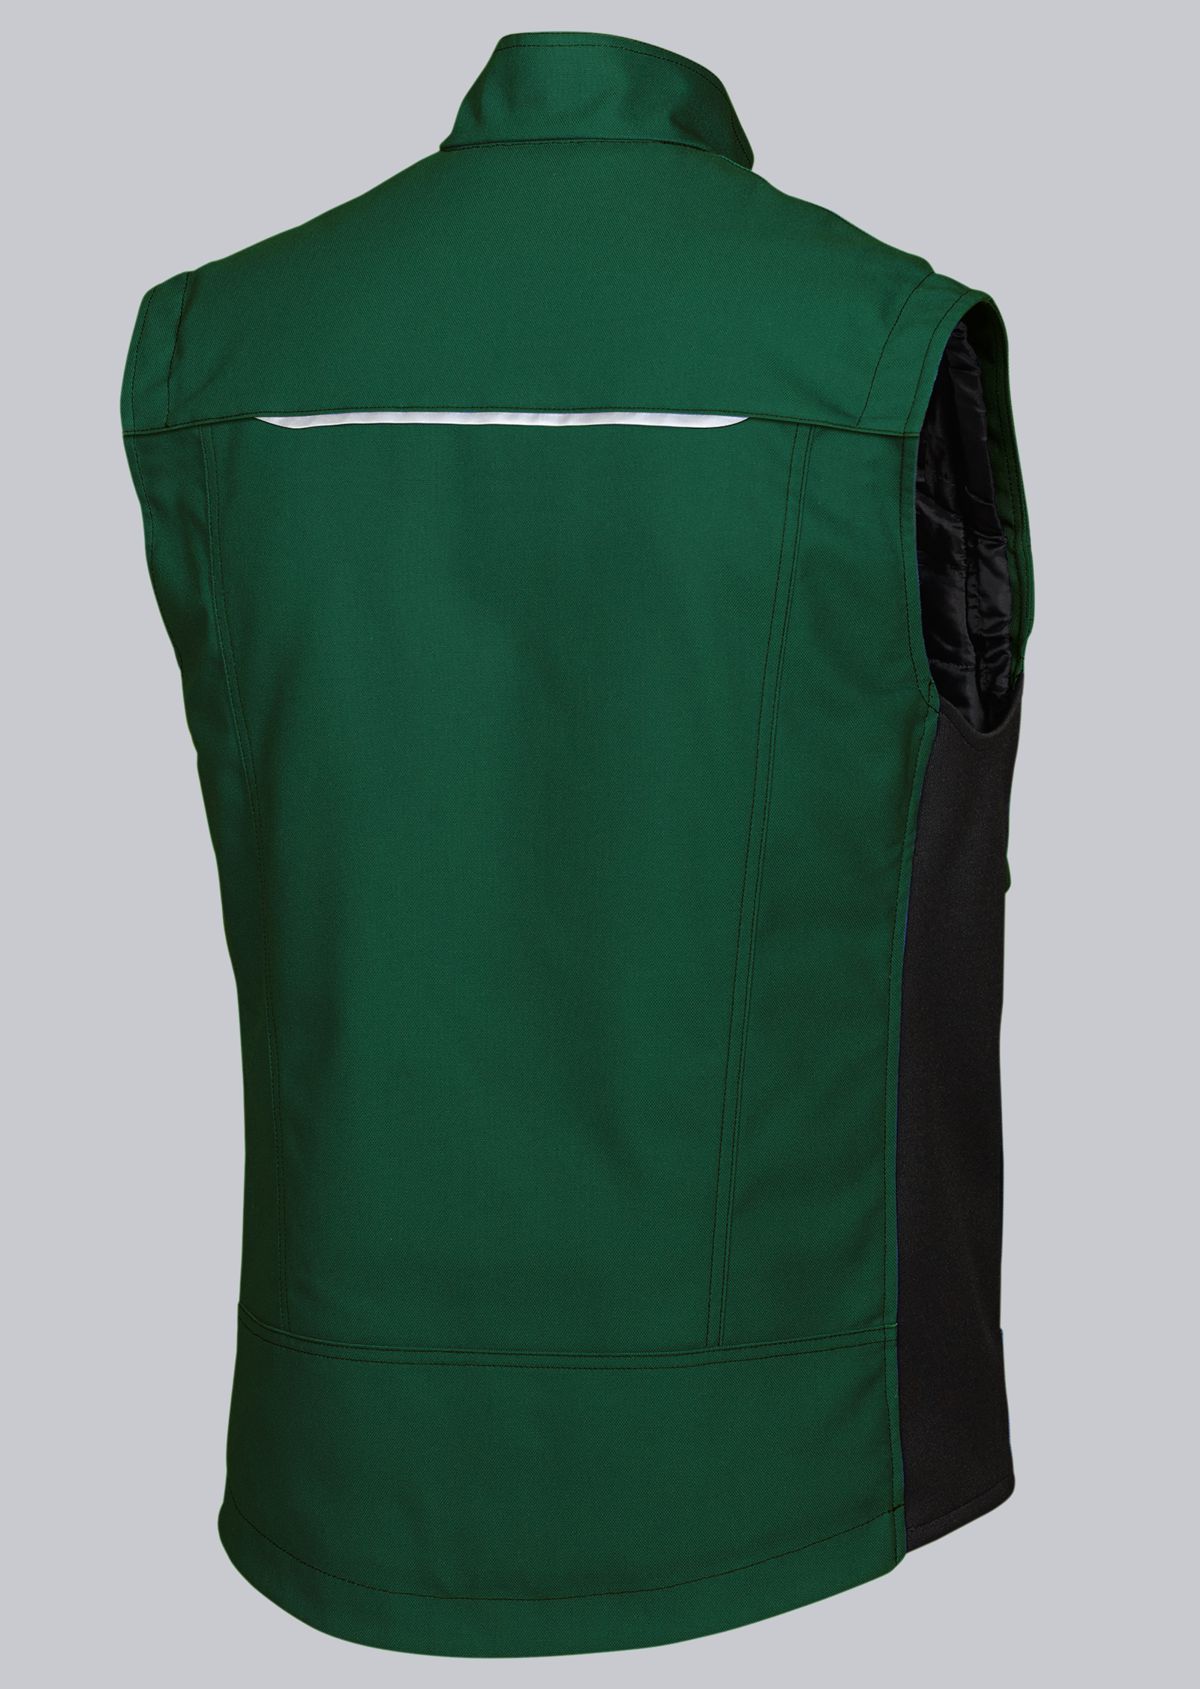 BP® Durable thermal waistcoat